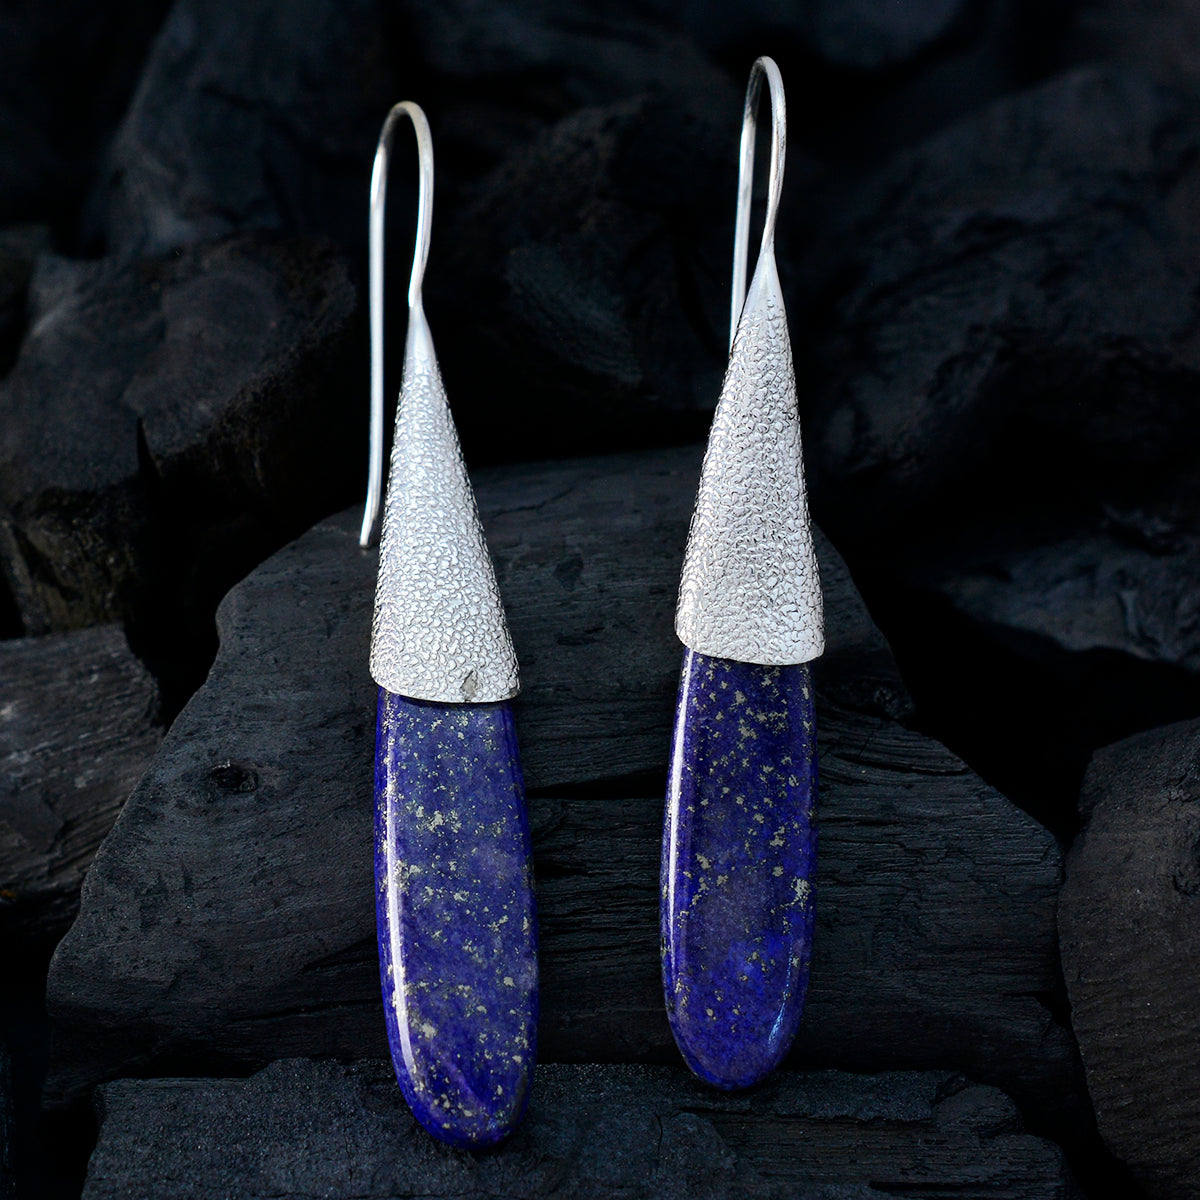 Riyo Good Gemstones fancy Cabochon Nevy Blue Lapis Lazuli Silver Earring gift for st. patricks day